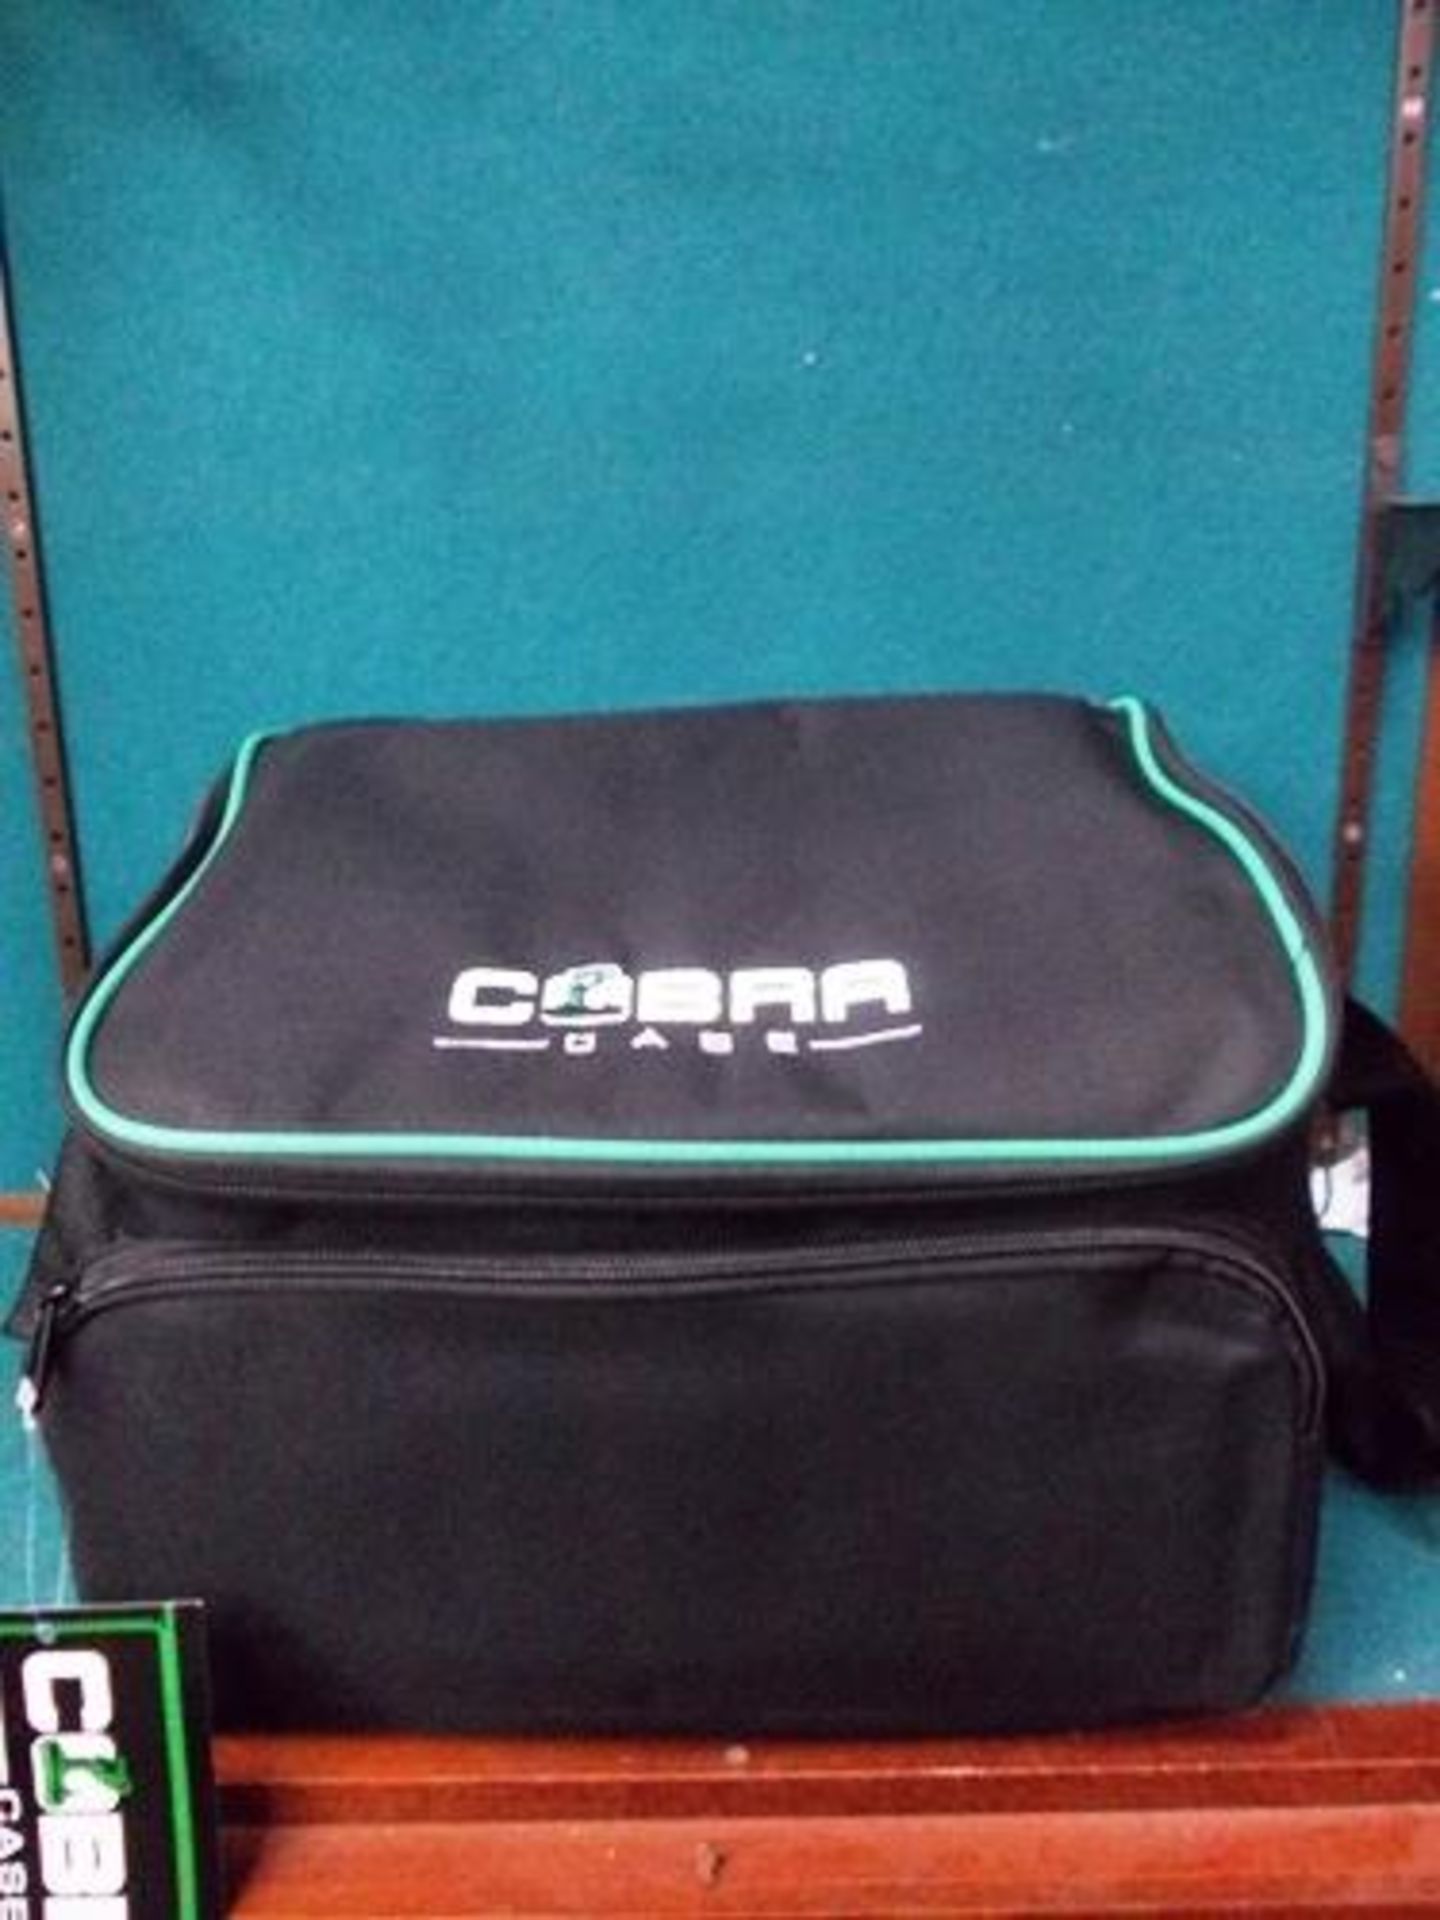 5 x Cobra case equipment bags, model CC1014 - New with tags (C9B)